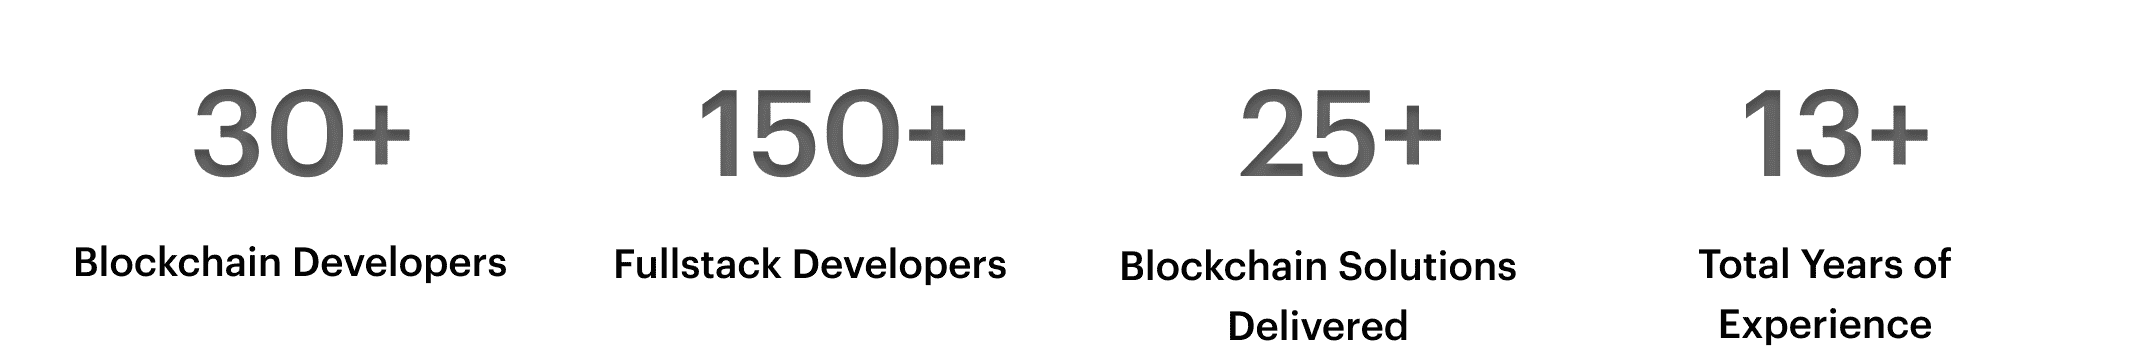 dapps development-numbers